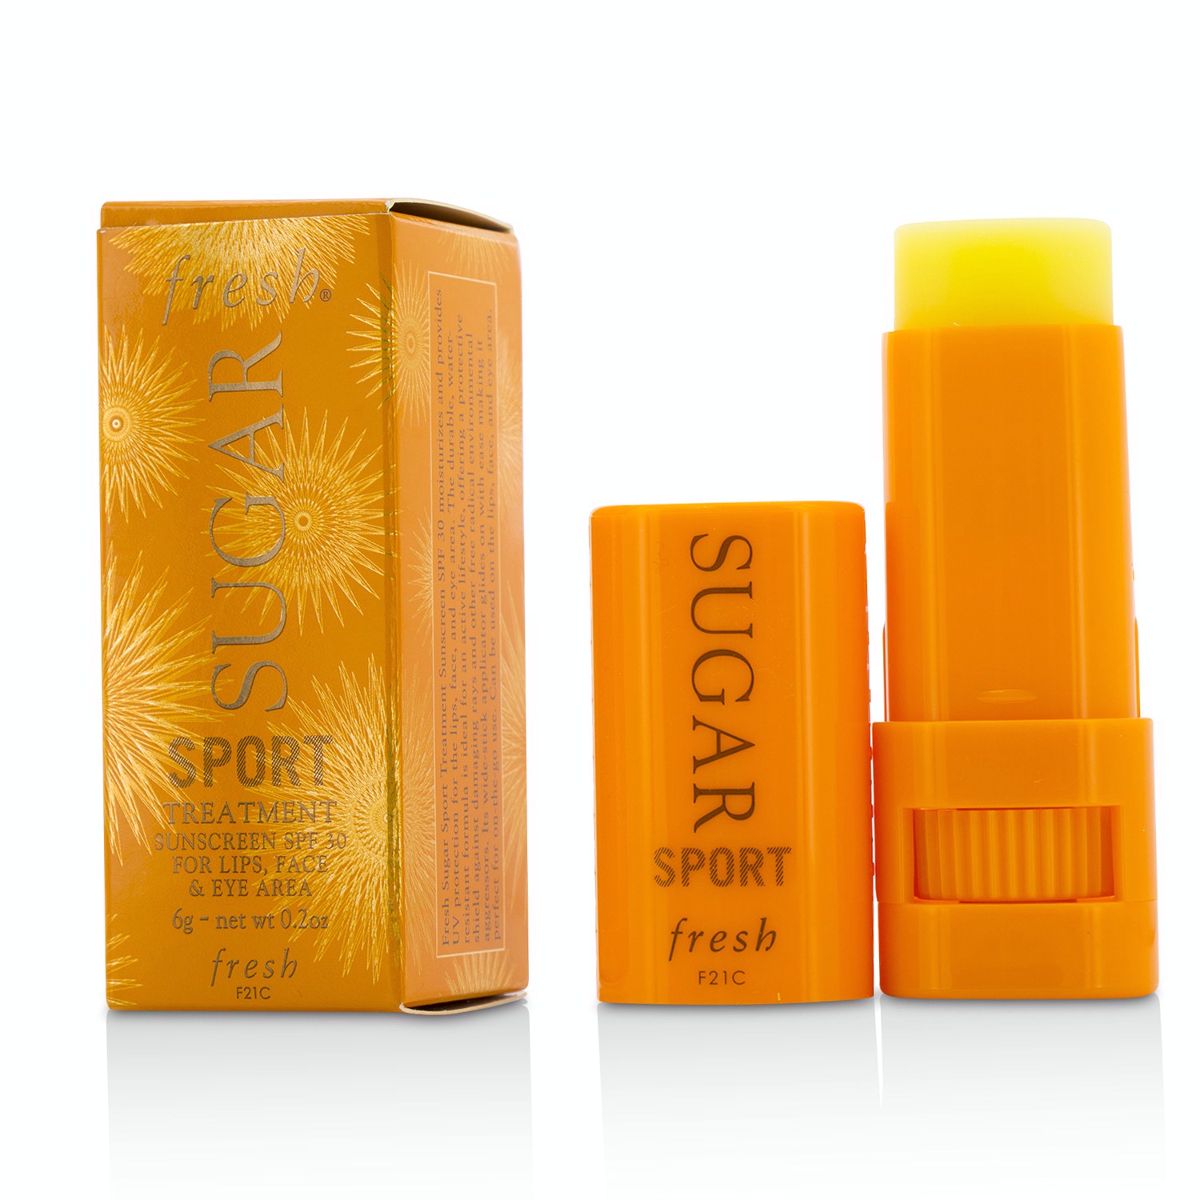 Sugar Sport Treatment Sunscreen SPF30 - For Lips Face  Eye Area Fresh Image